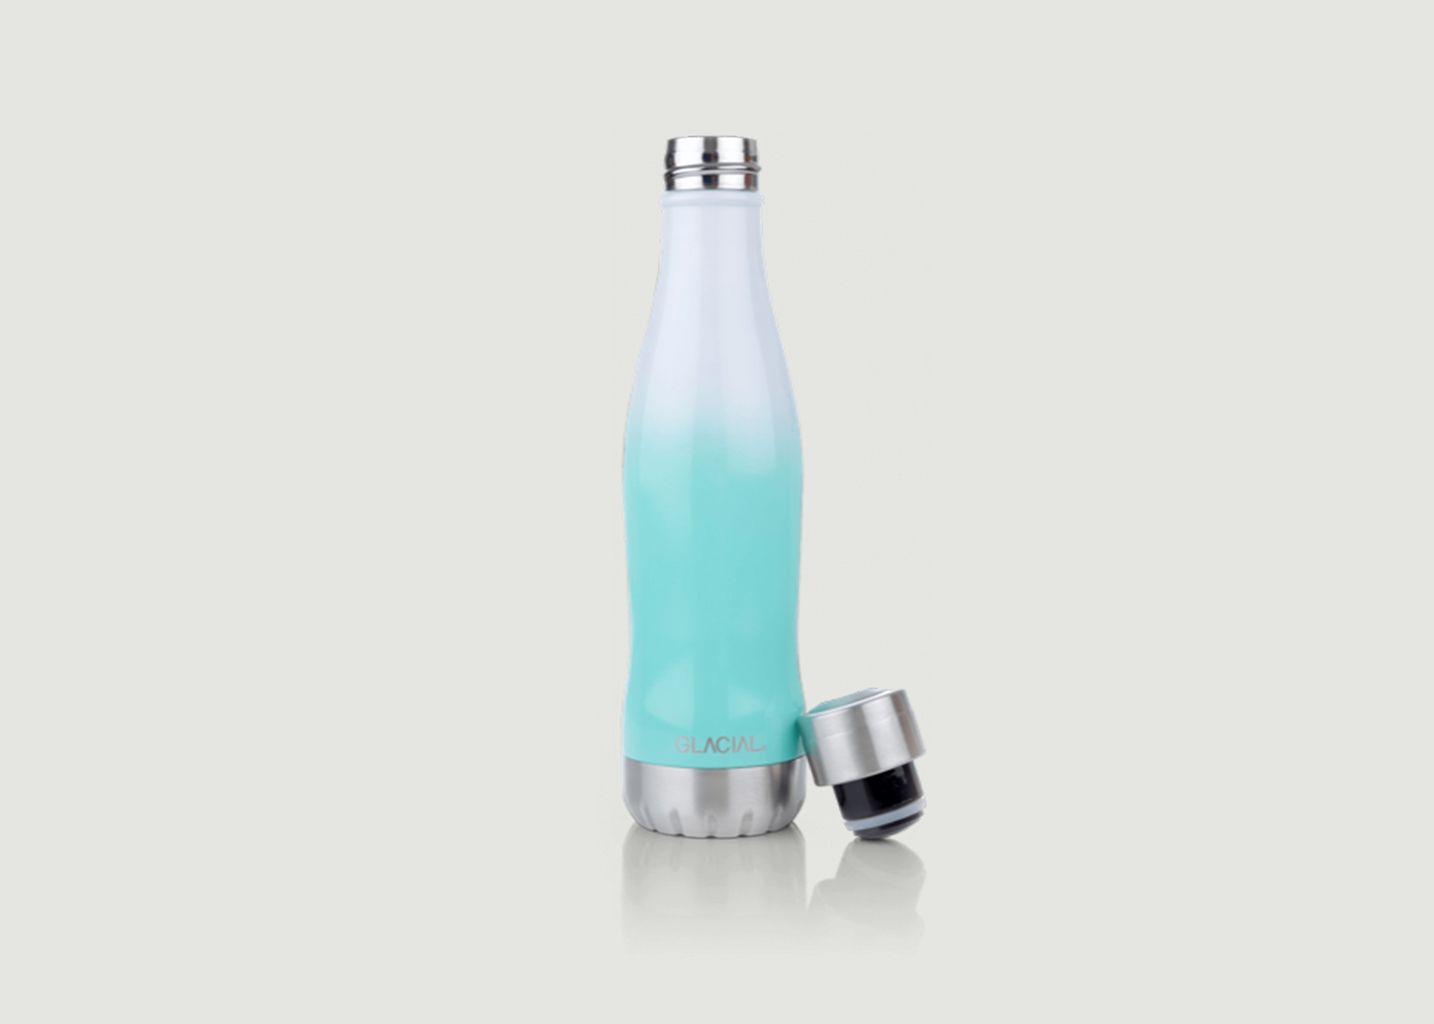 Bubble Mint stainless steel bottle - Glacial